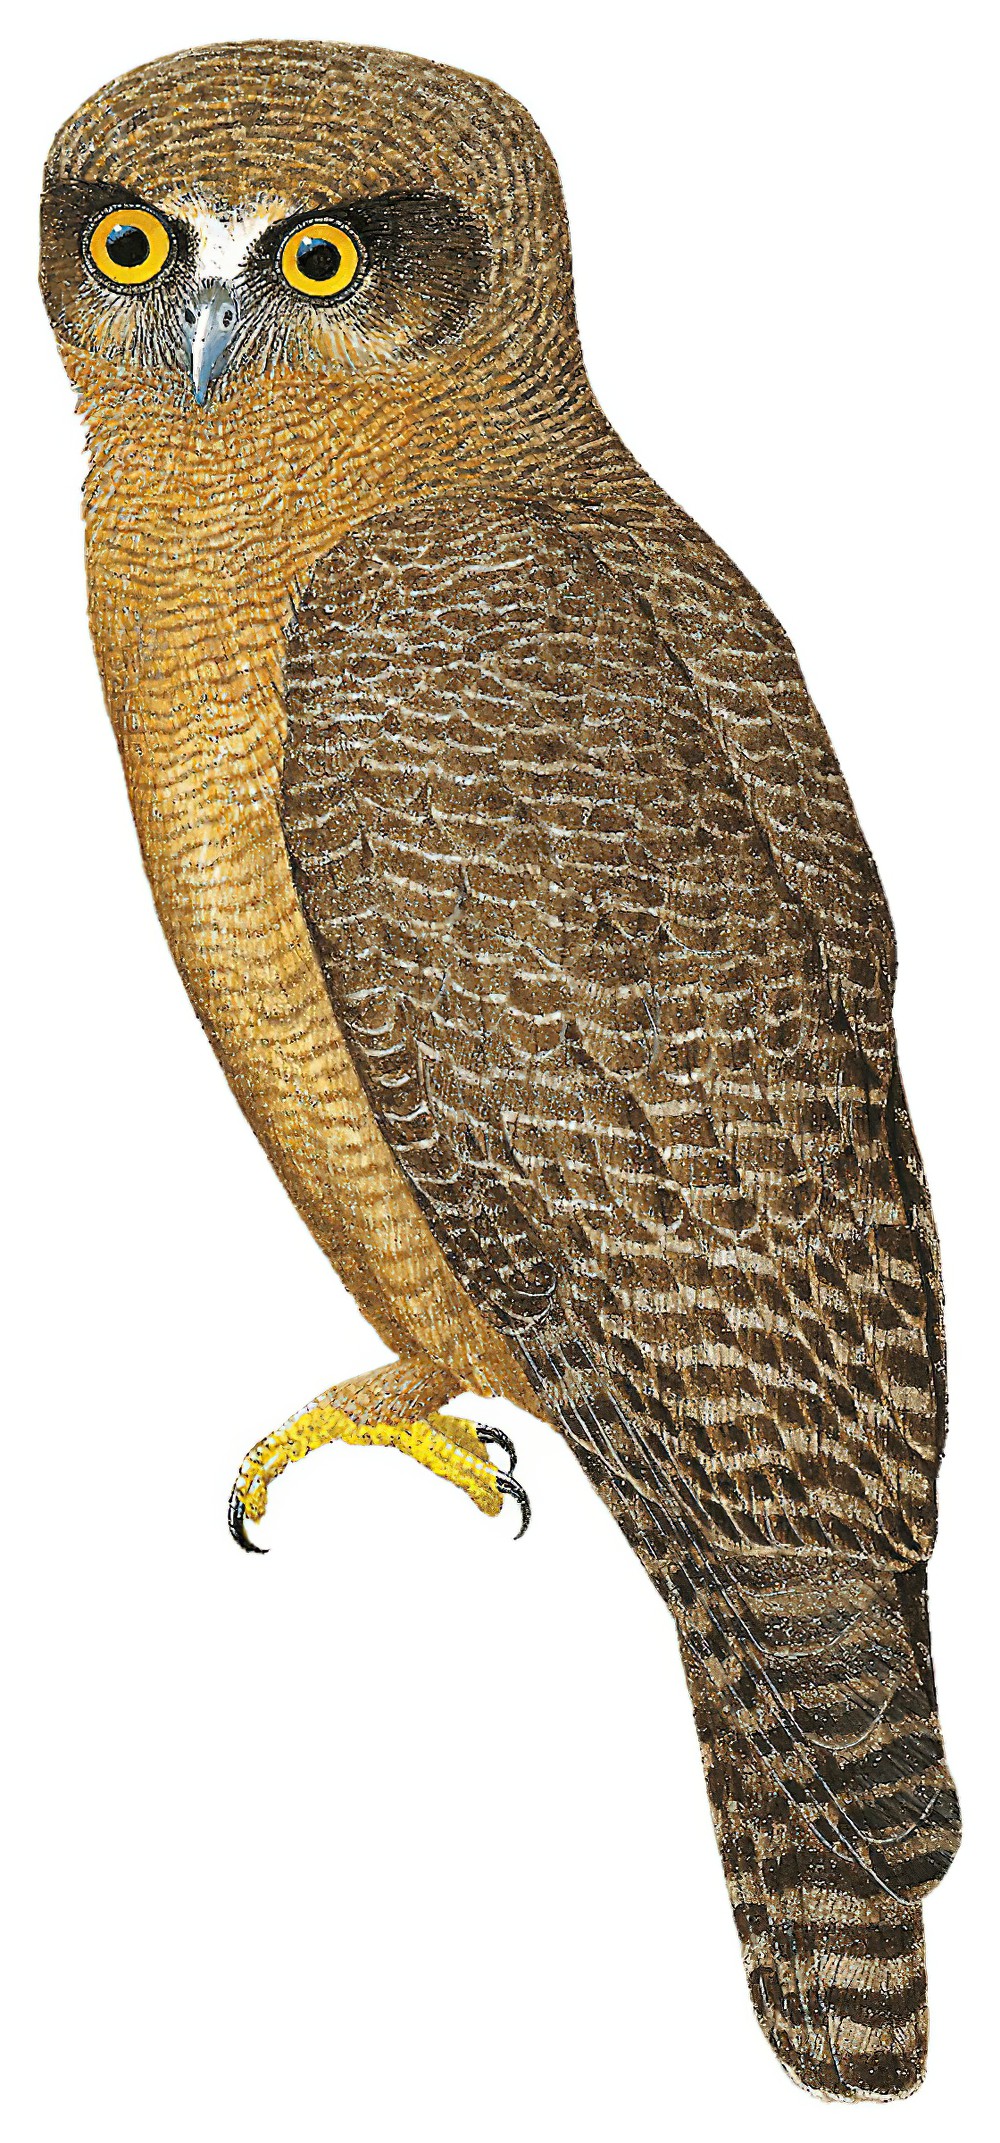 Rufous Owl / Ninox rufa